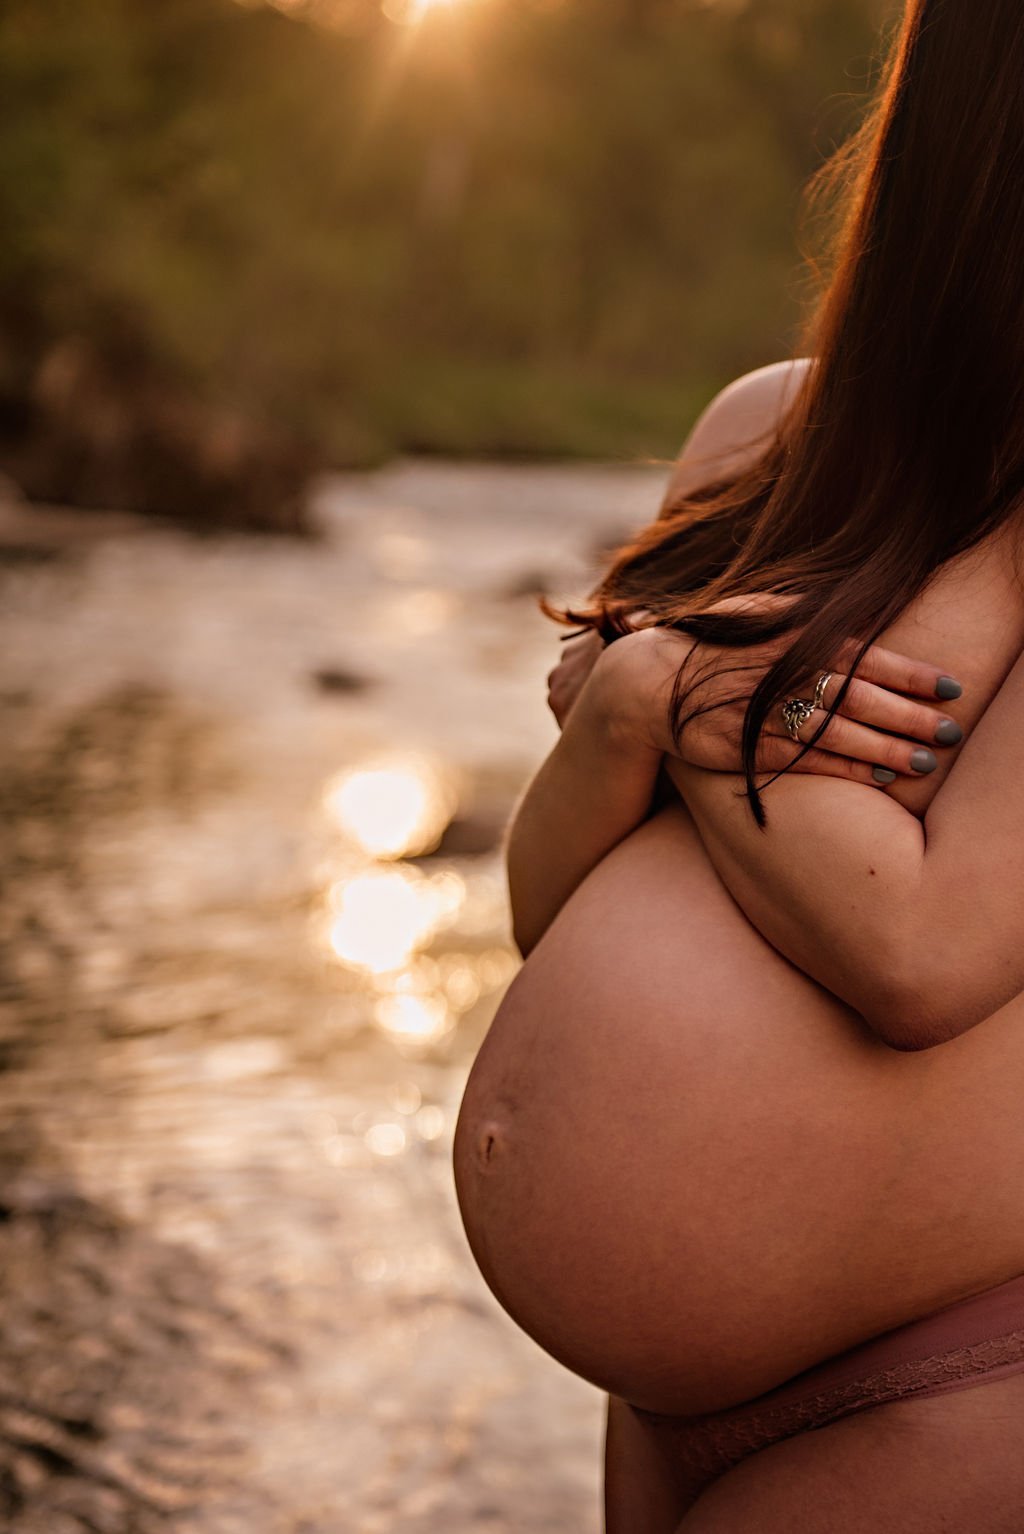 akron-maternity-session-boudoir-nude-photographer-lauren-grayson-15.jpeg